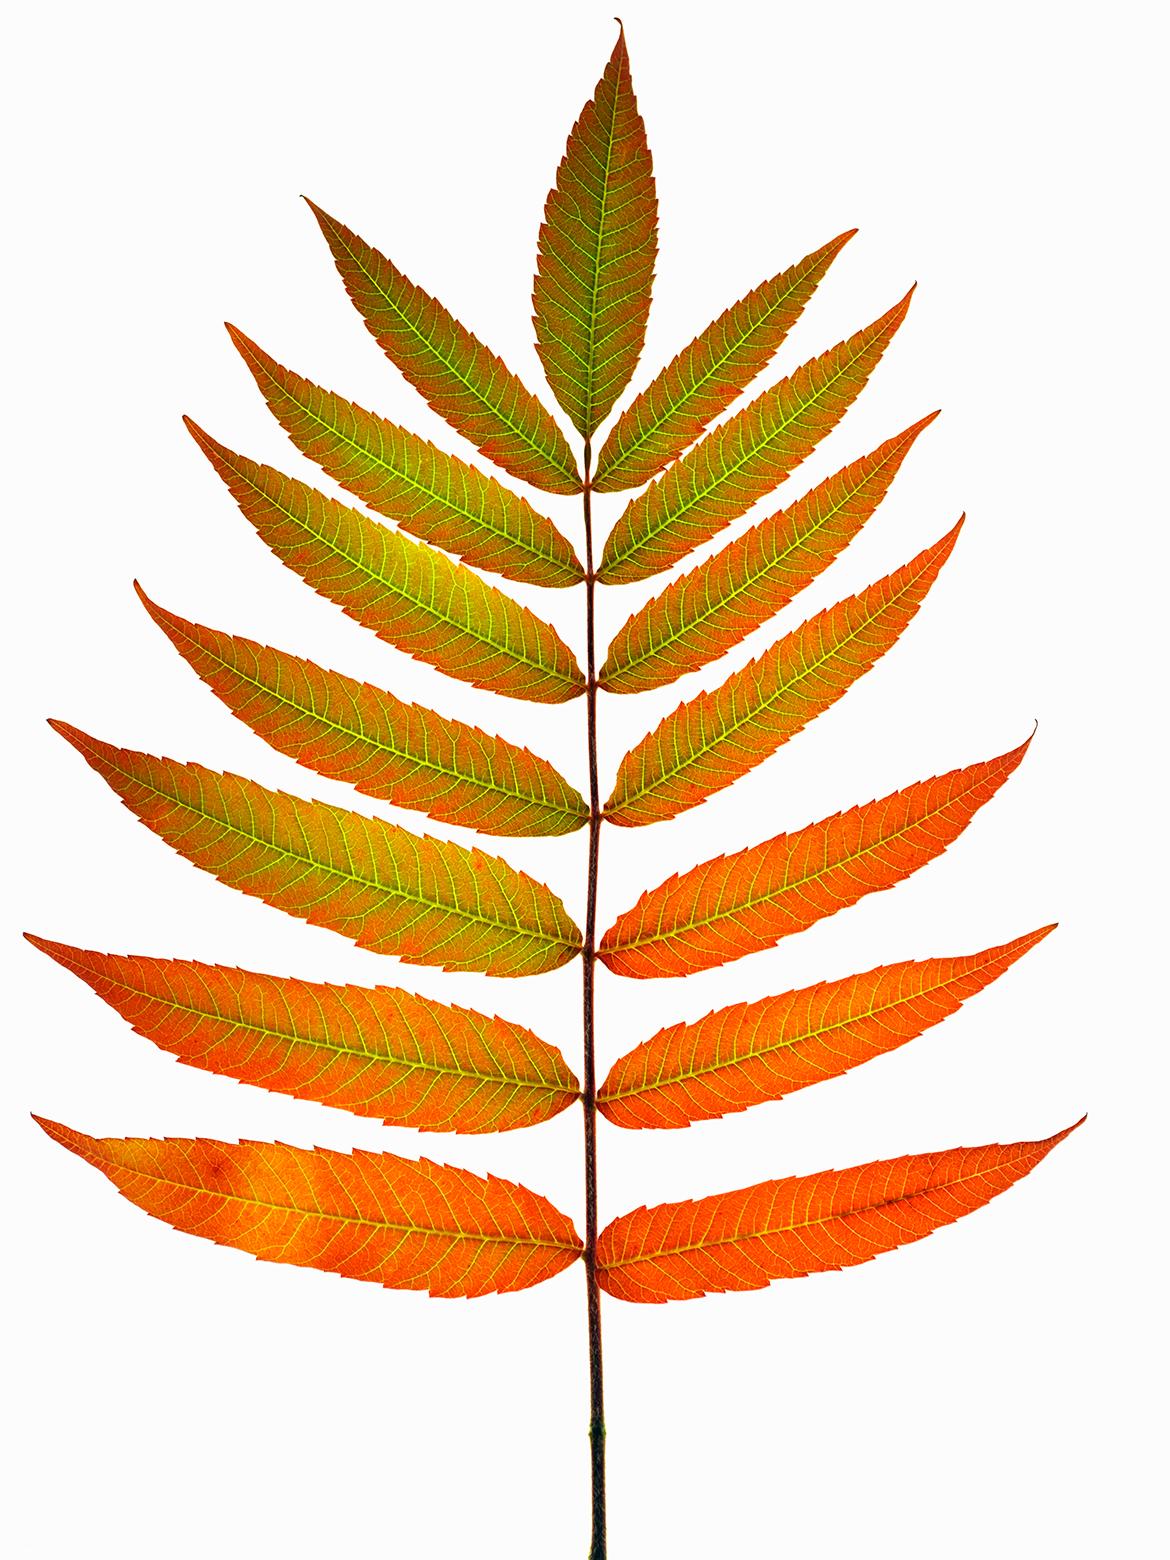  Cosmo Condina Color Photograph - Sumac Leaves in Autumn, 2020